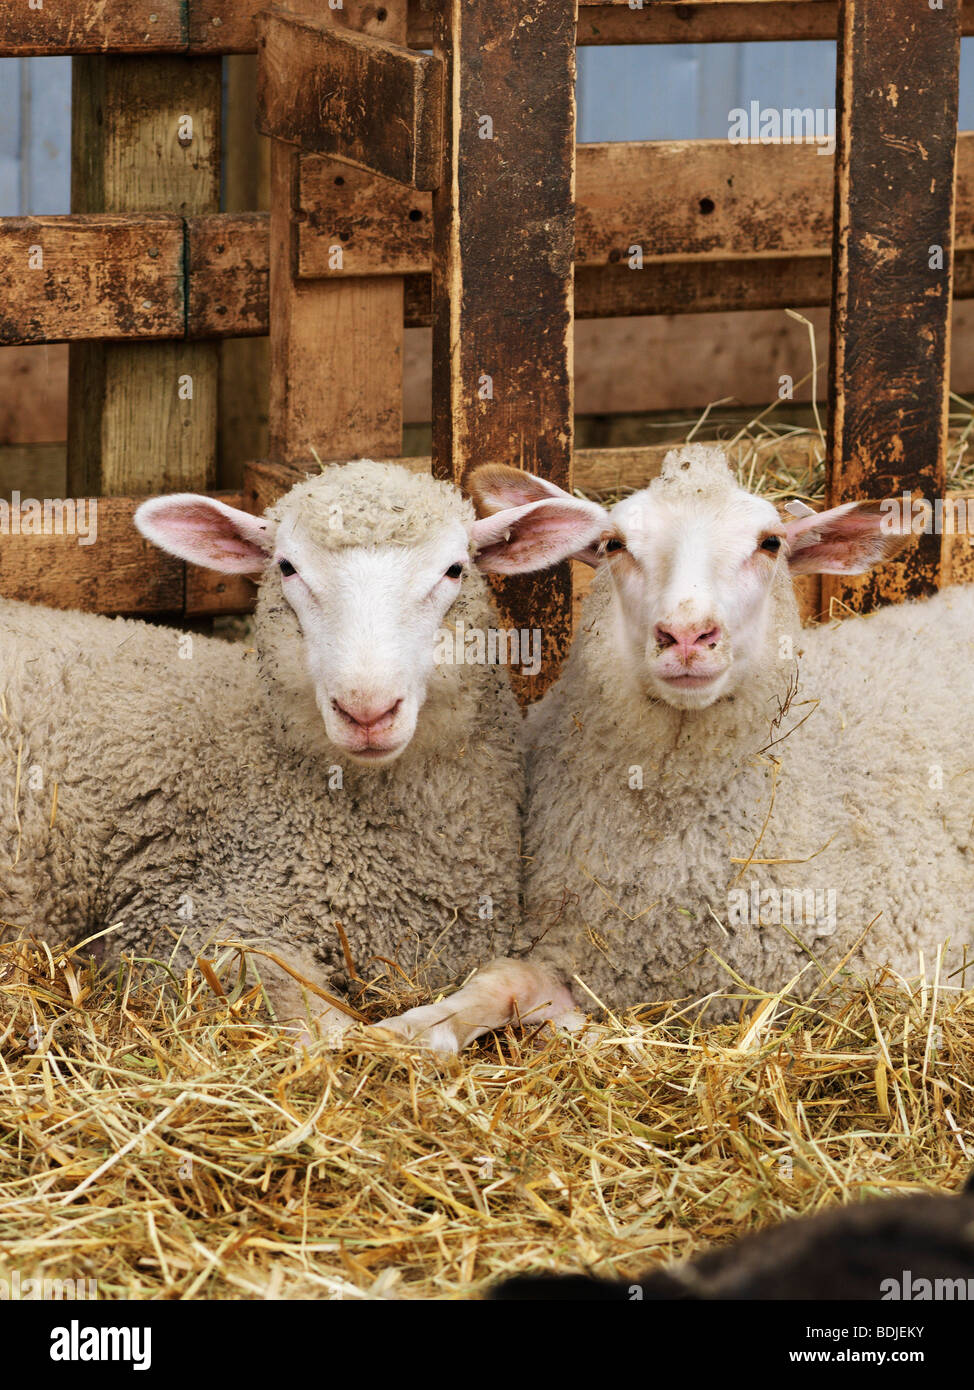 Sheep in Pen Stock Photo